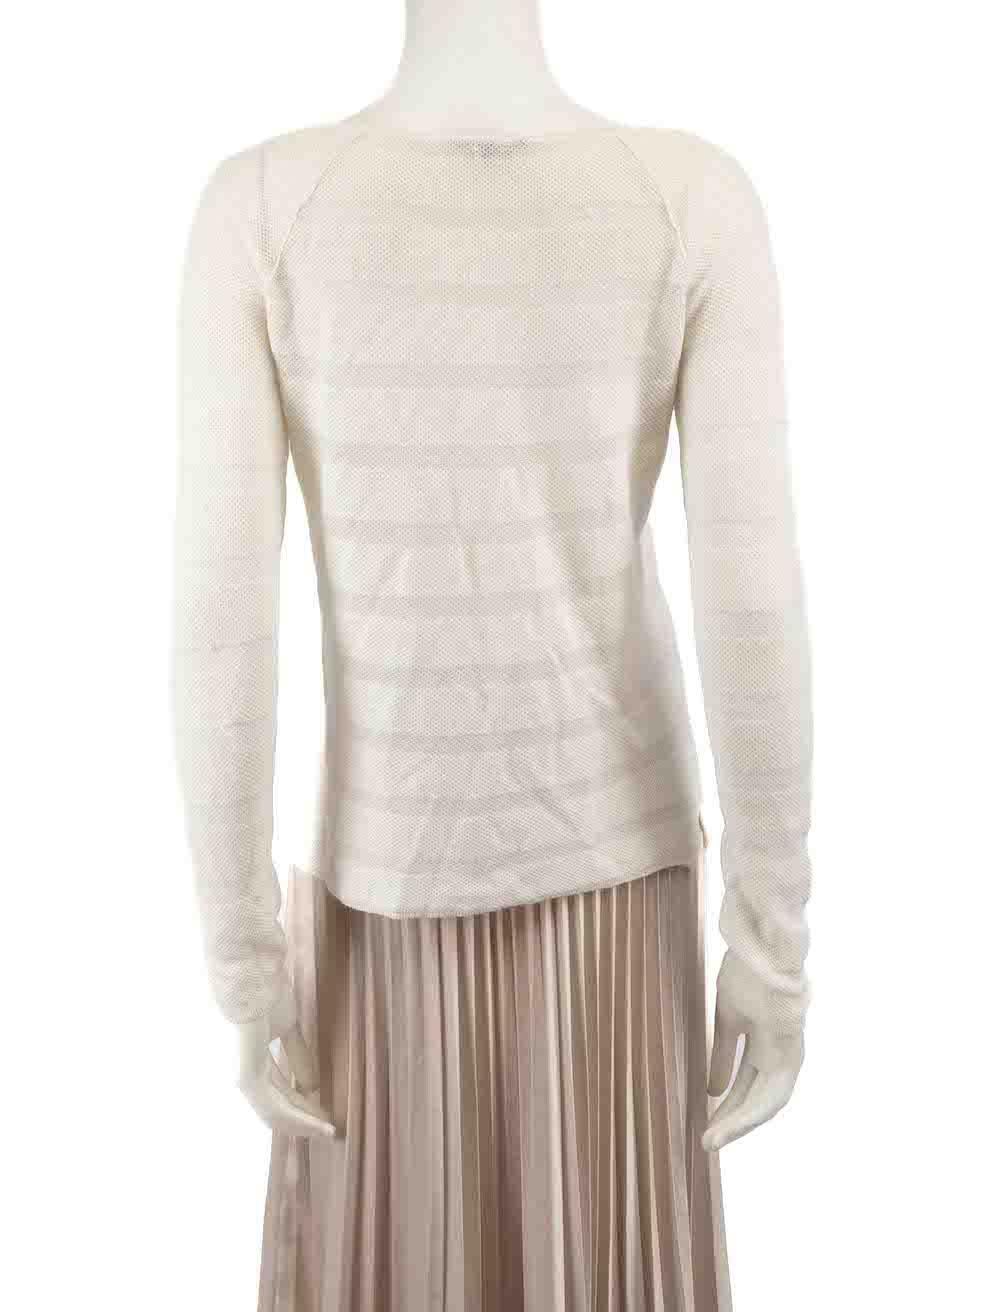 Loro Piana Cream Cashmere Striped Knit Top Size S In Good Condition For Sale In London, GB